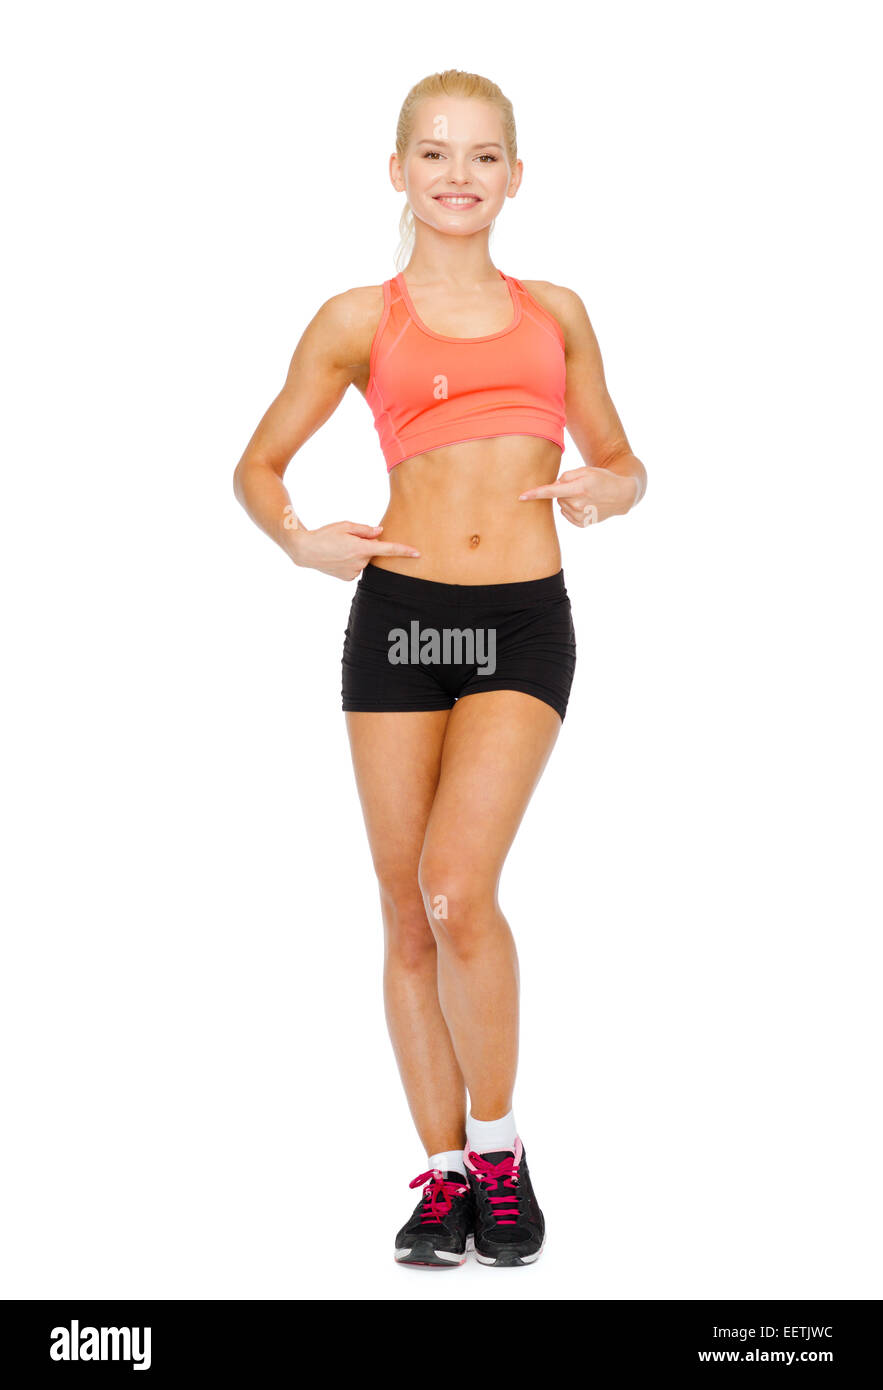 https://c8.alamy.com/comp/EETJWC/smiling-sporty-woman-pointing-at-her-six-pack-EETJWC.jpg